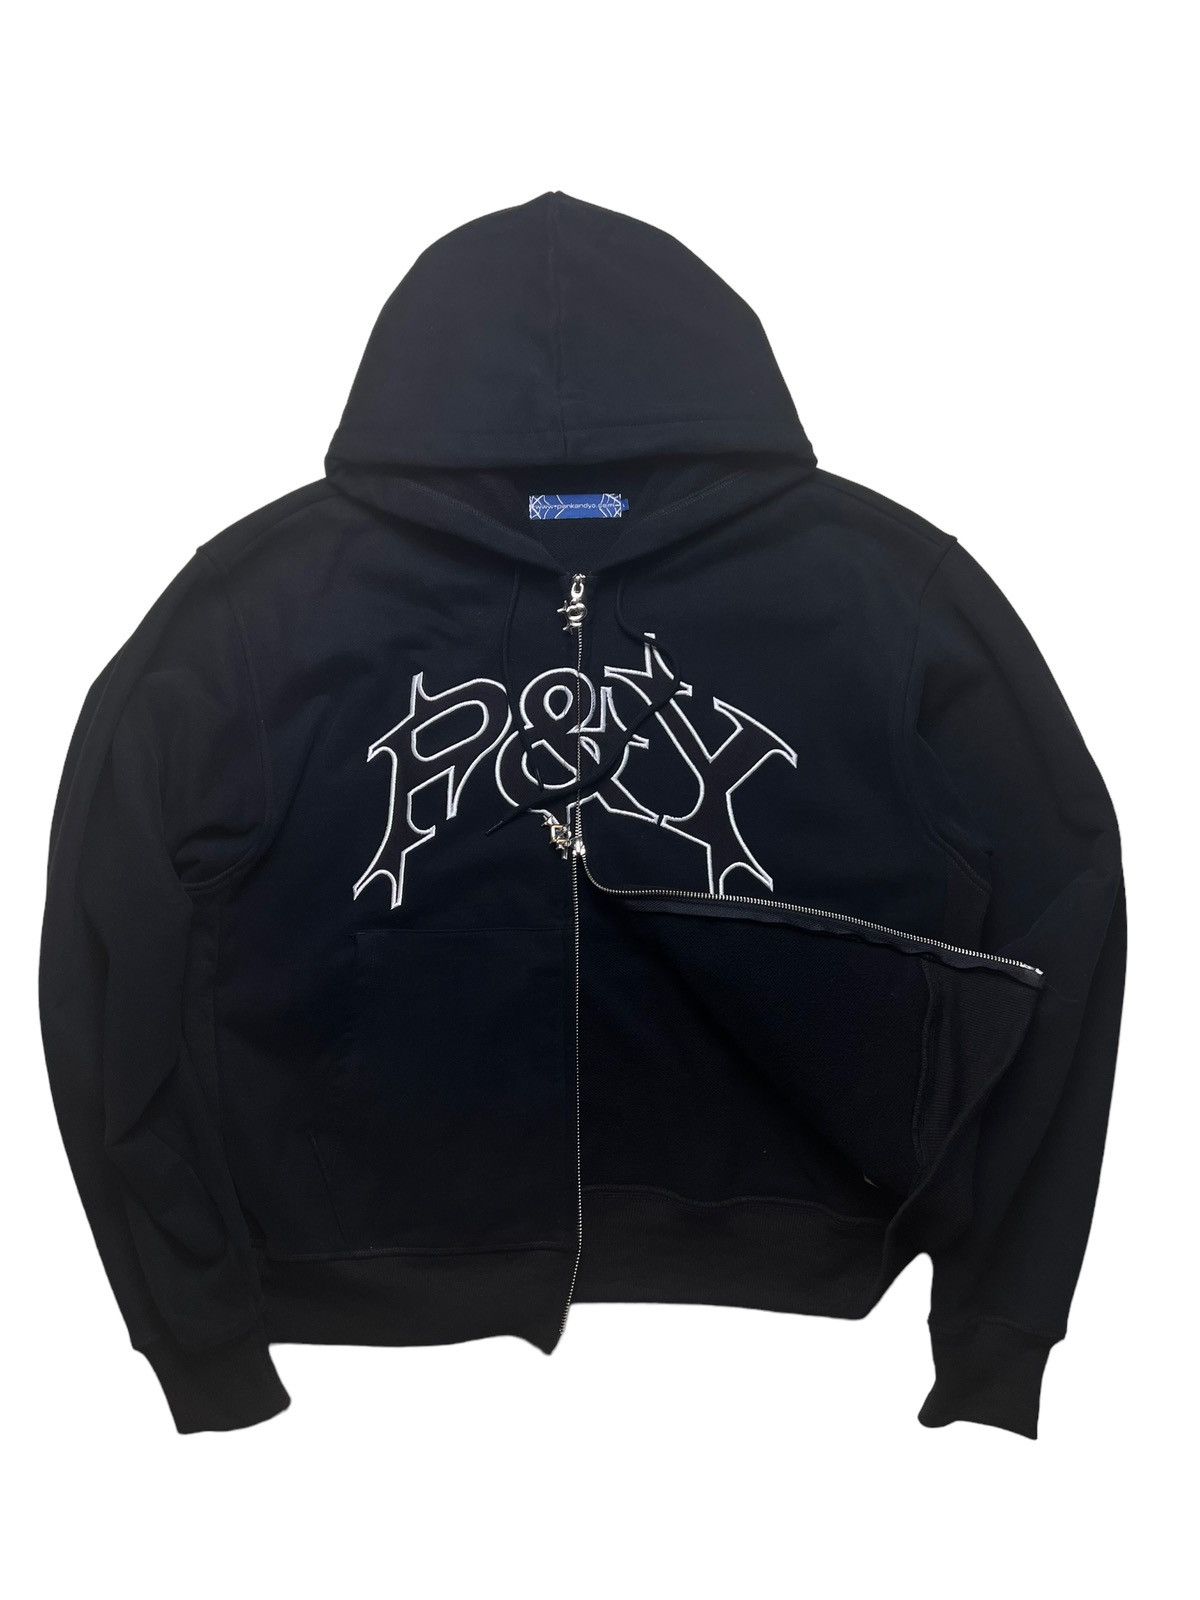 pankandyopunkandyo zip hoodie Black L